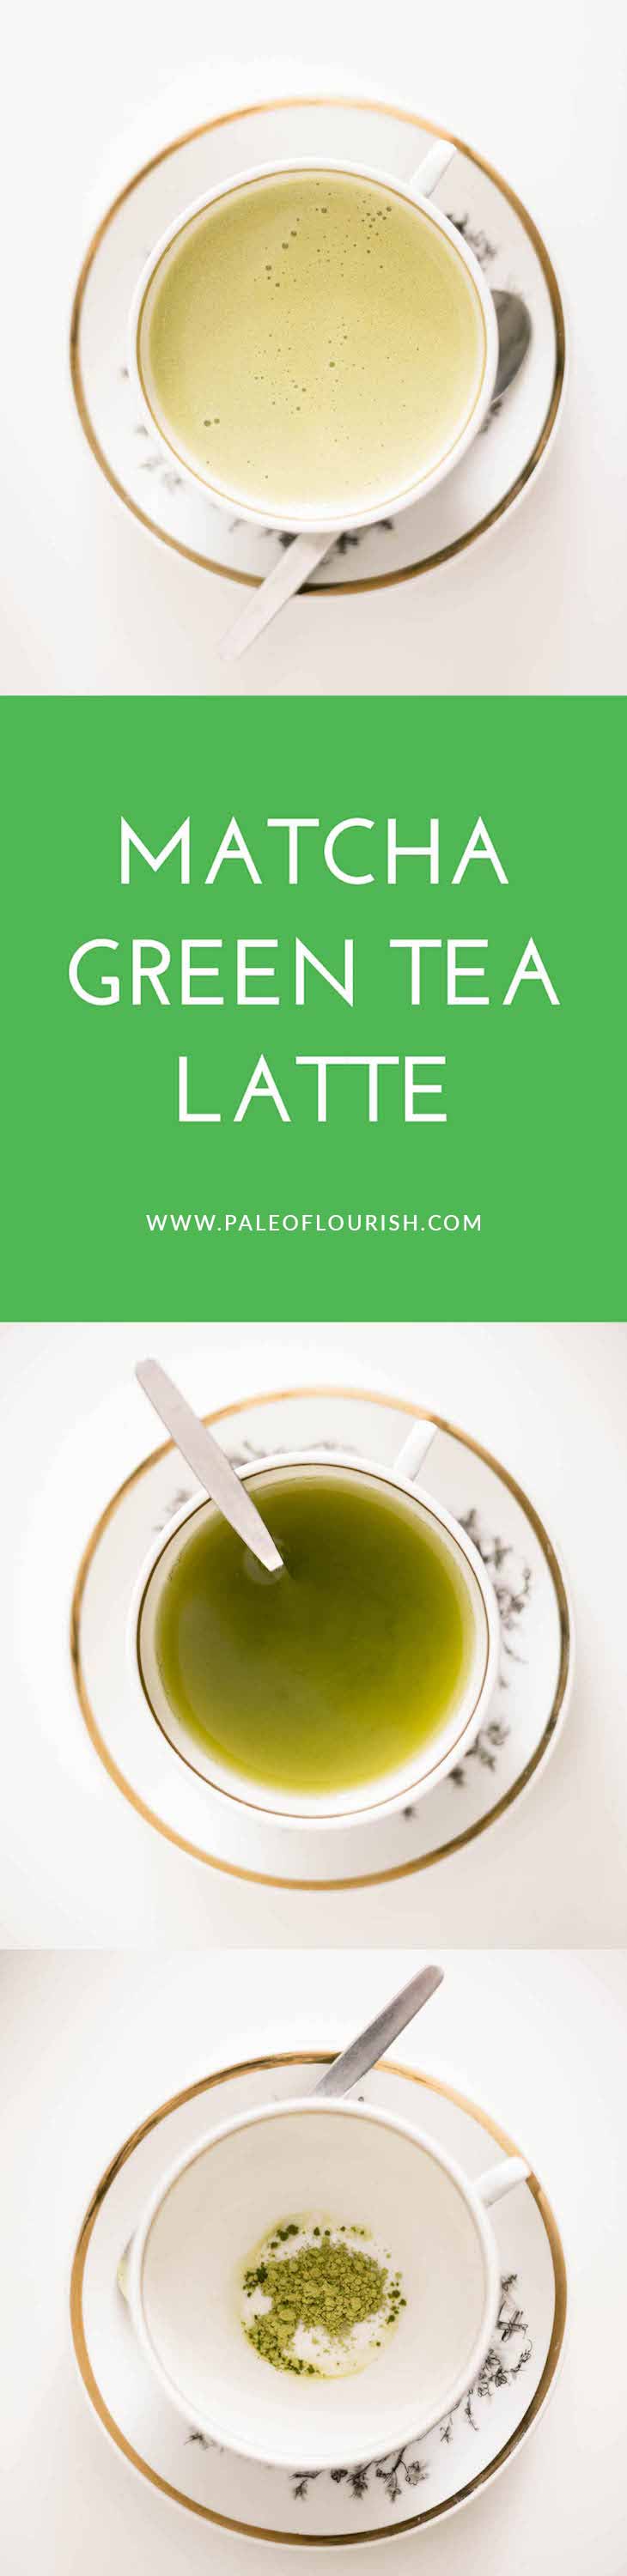 Matcha Green Tea Latte Recipe #paleo #keto #recipe https://paleoflourish.com/matcha-green-tea-latte-recipe